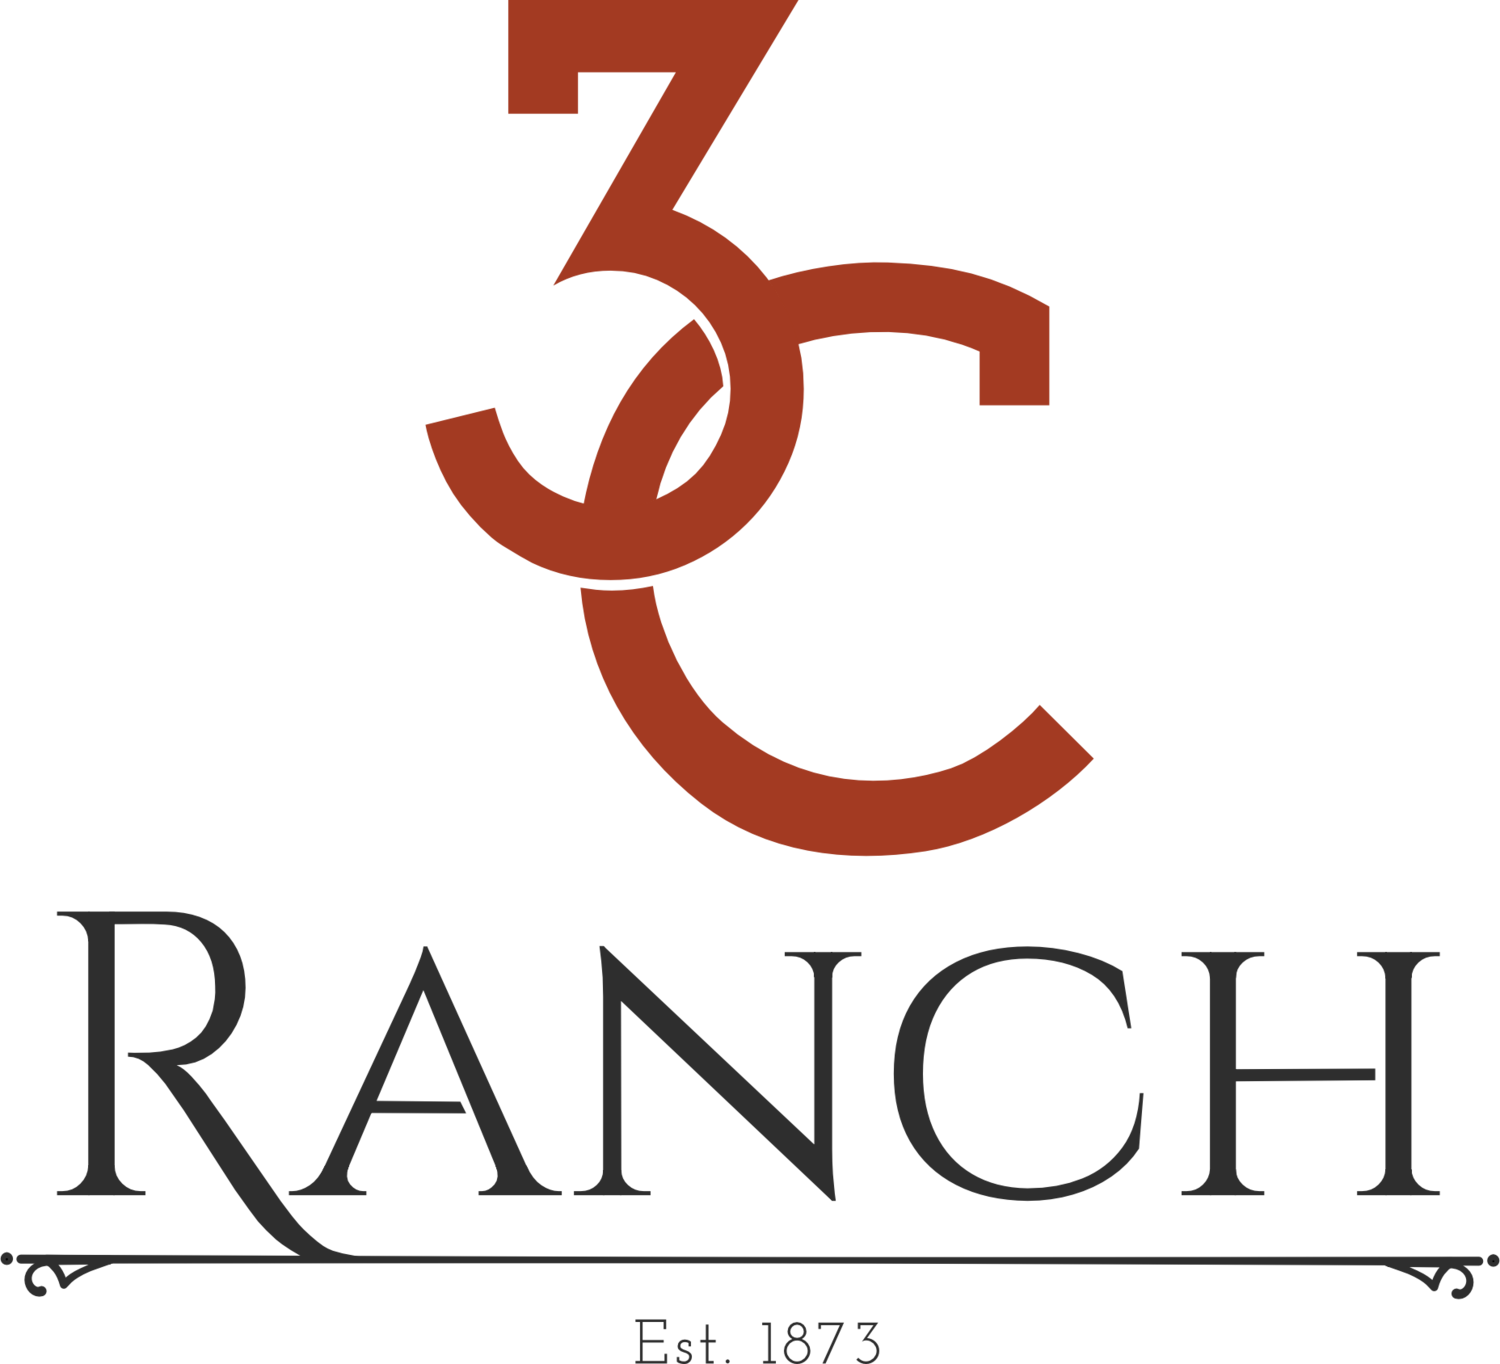 The Historic 3C Ranch